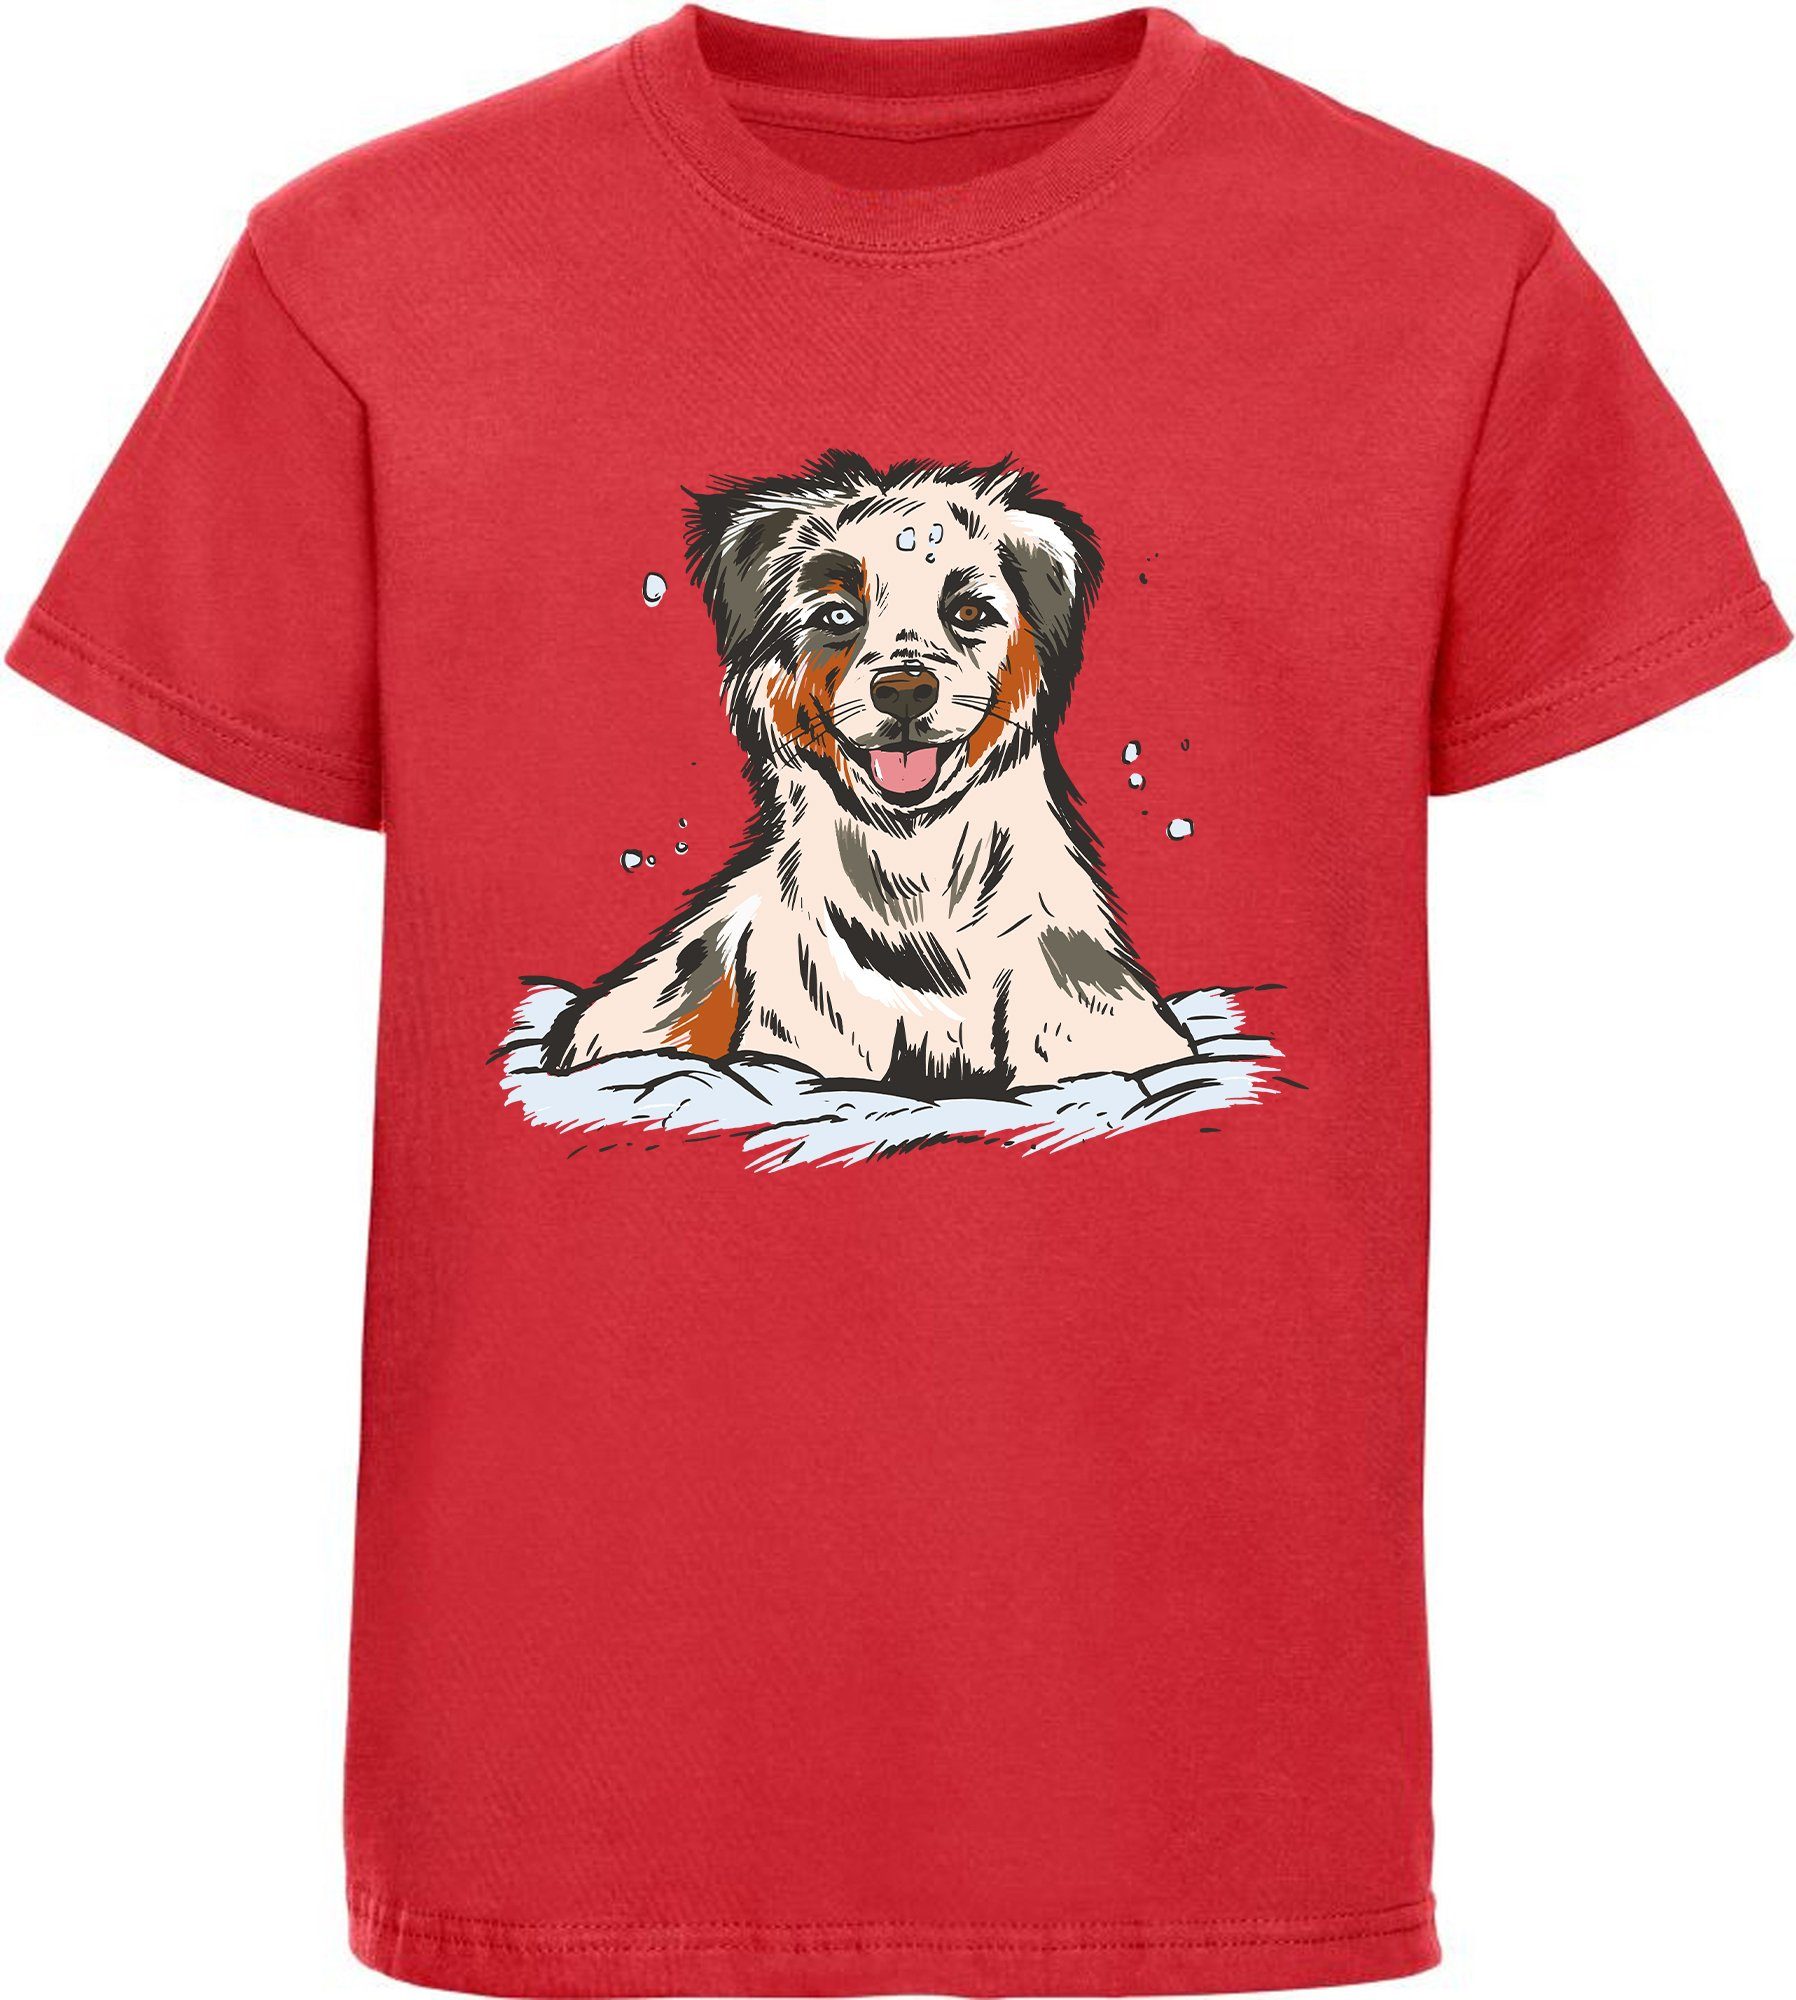 MyDesign24 Print-Shirt bedrucktes Kinder und Jugend Hunde T-Shirt Australian Shepherd Welpe Baumwollshirt mit Aufdruck, i216 rot